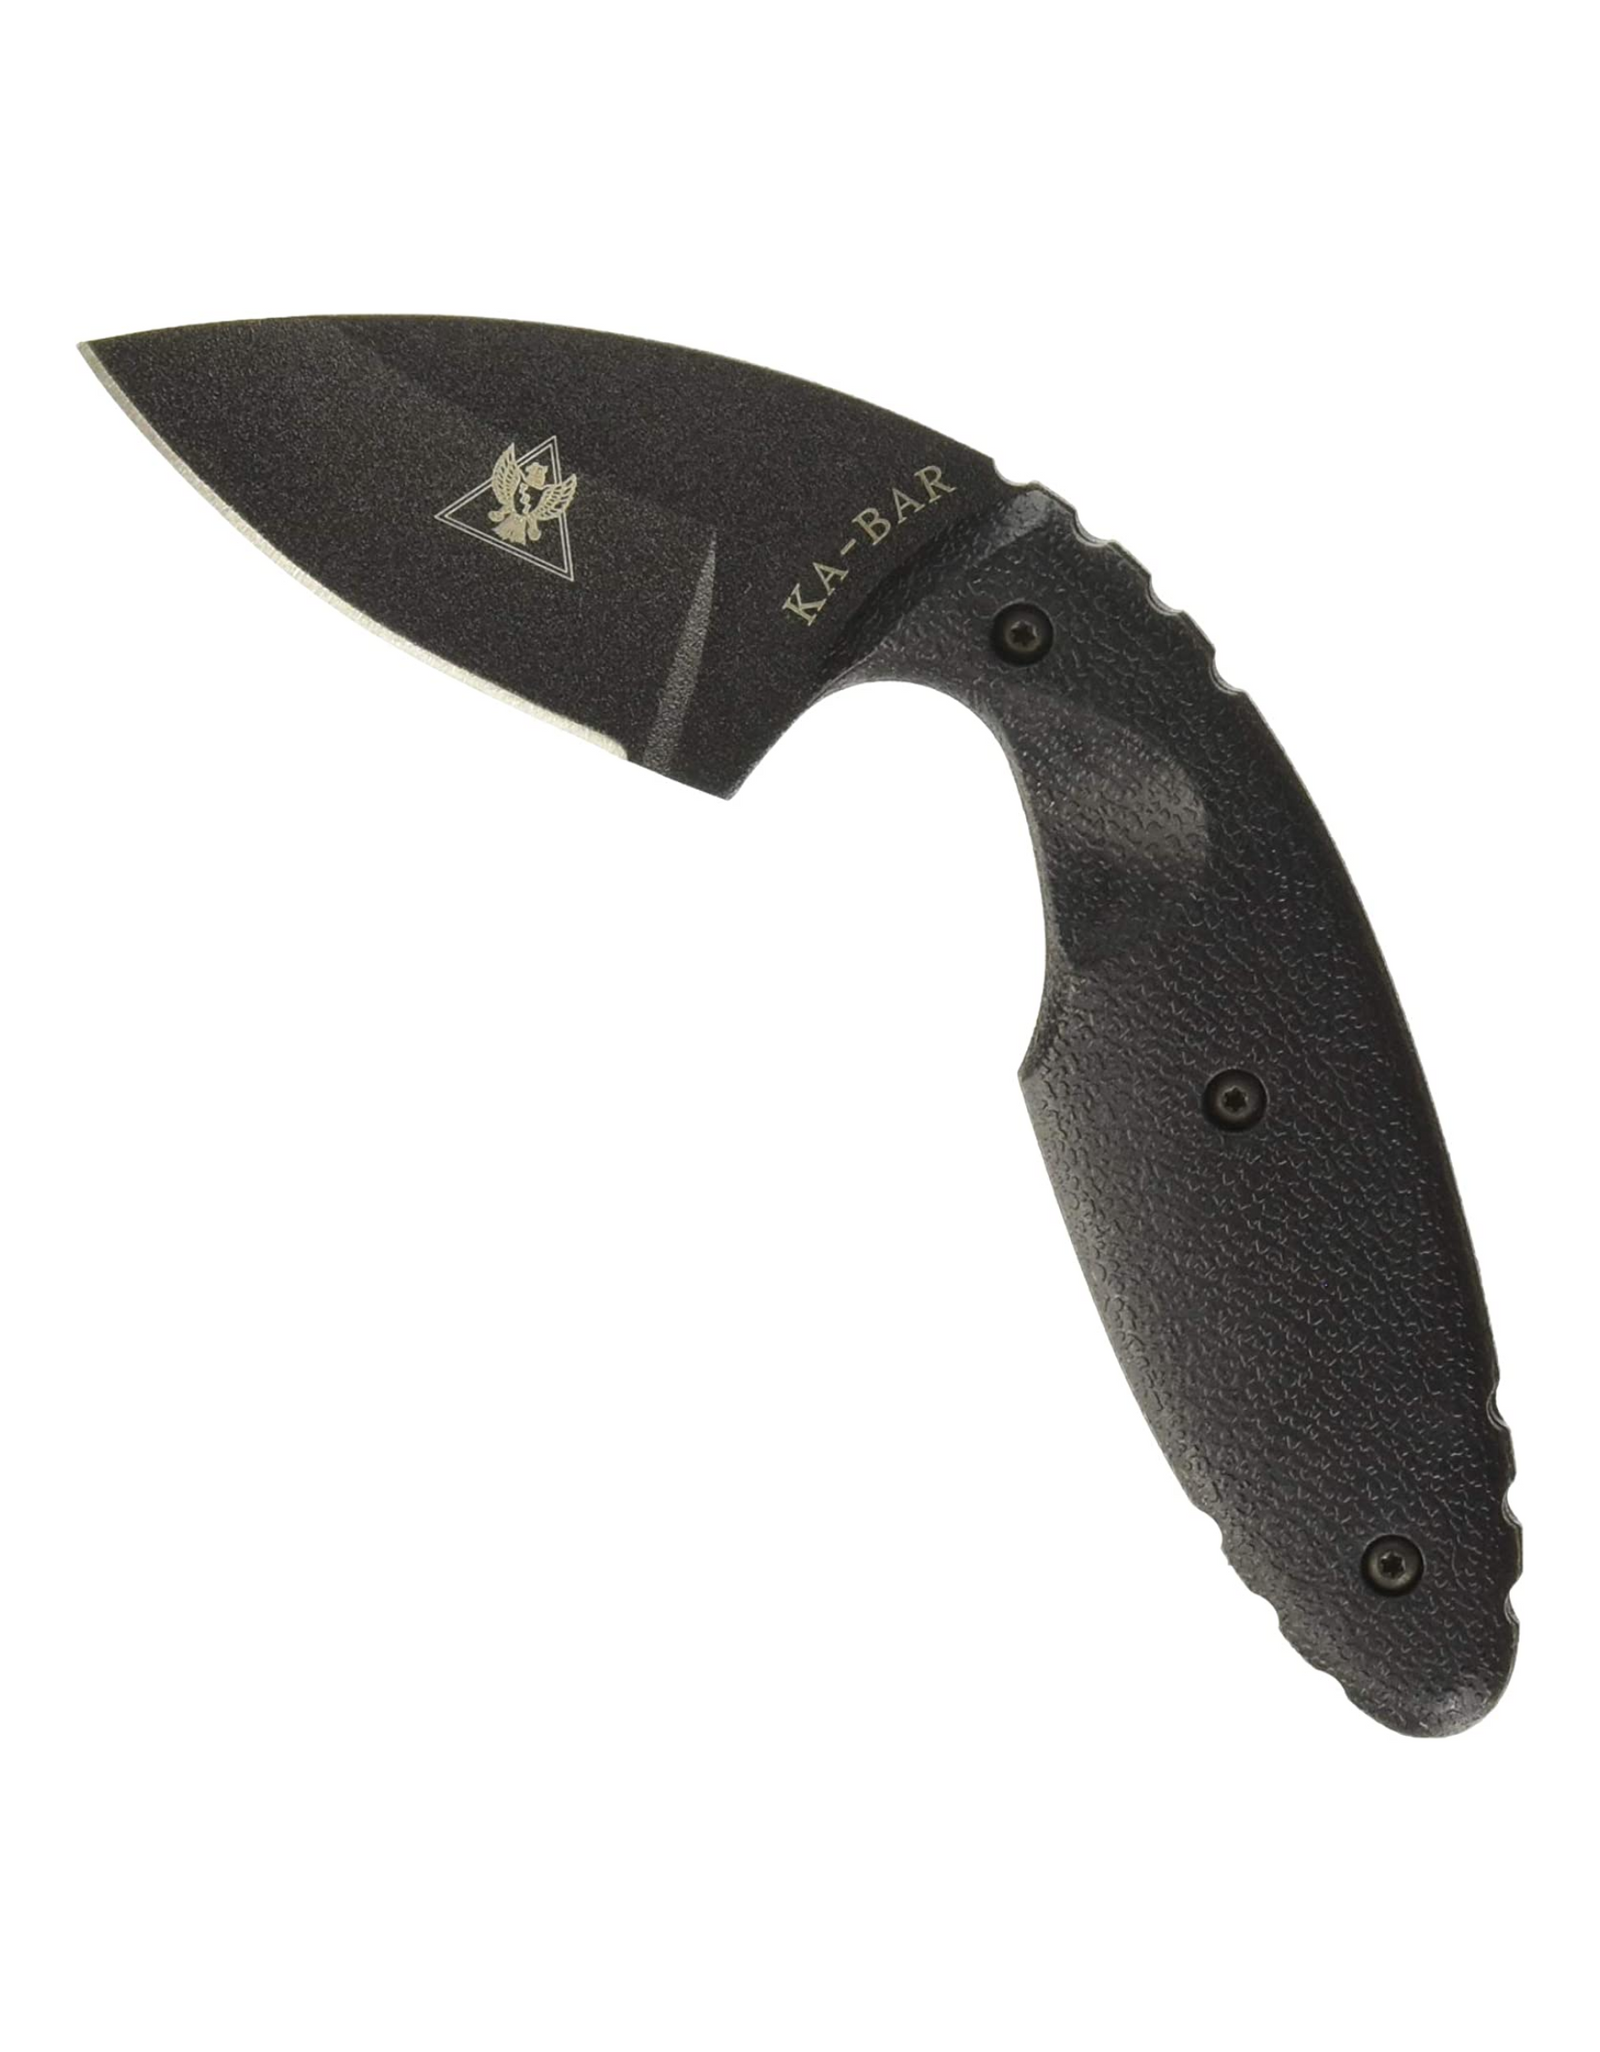 KA-BAR TDI Law Enforcement Knife Fixed Blade, Black